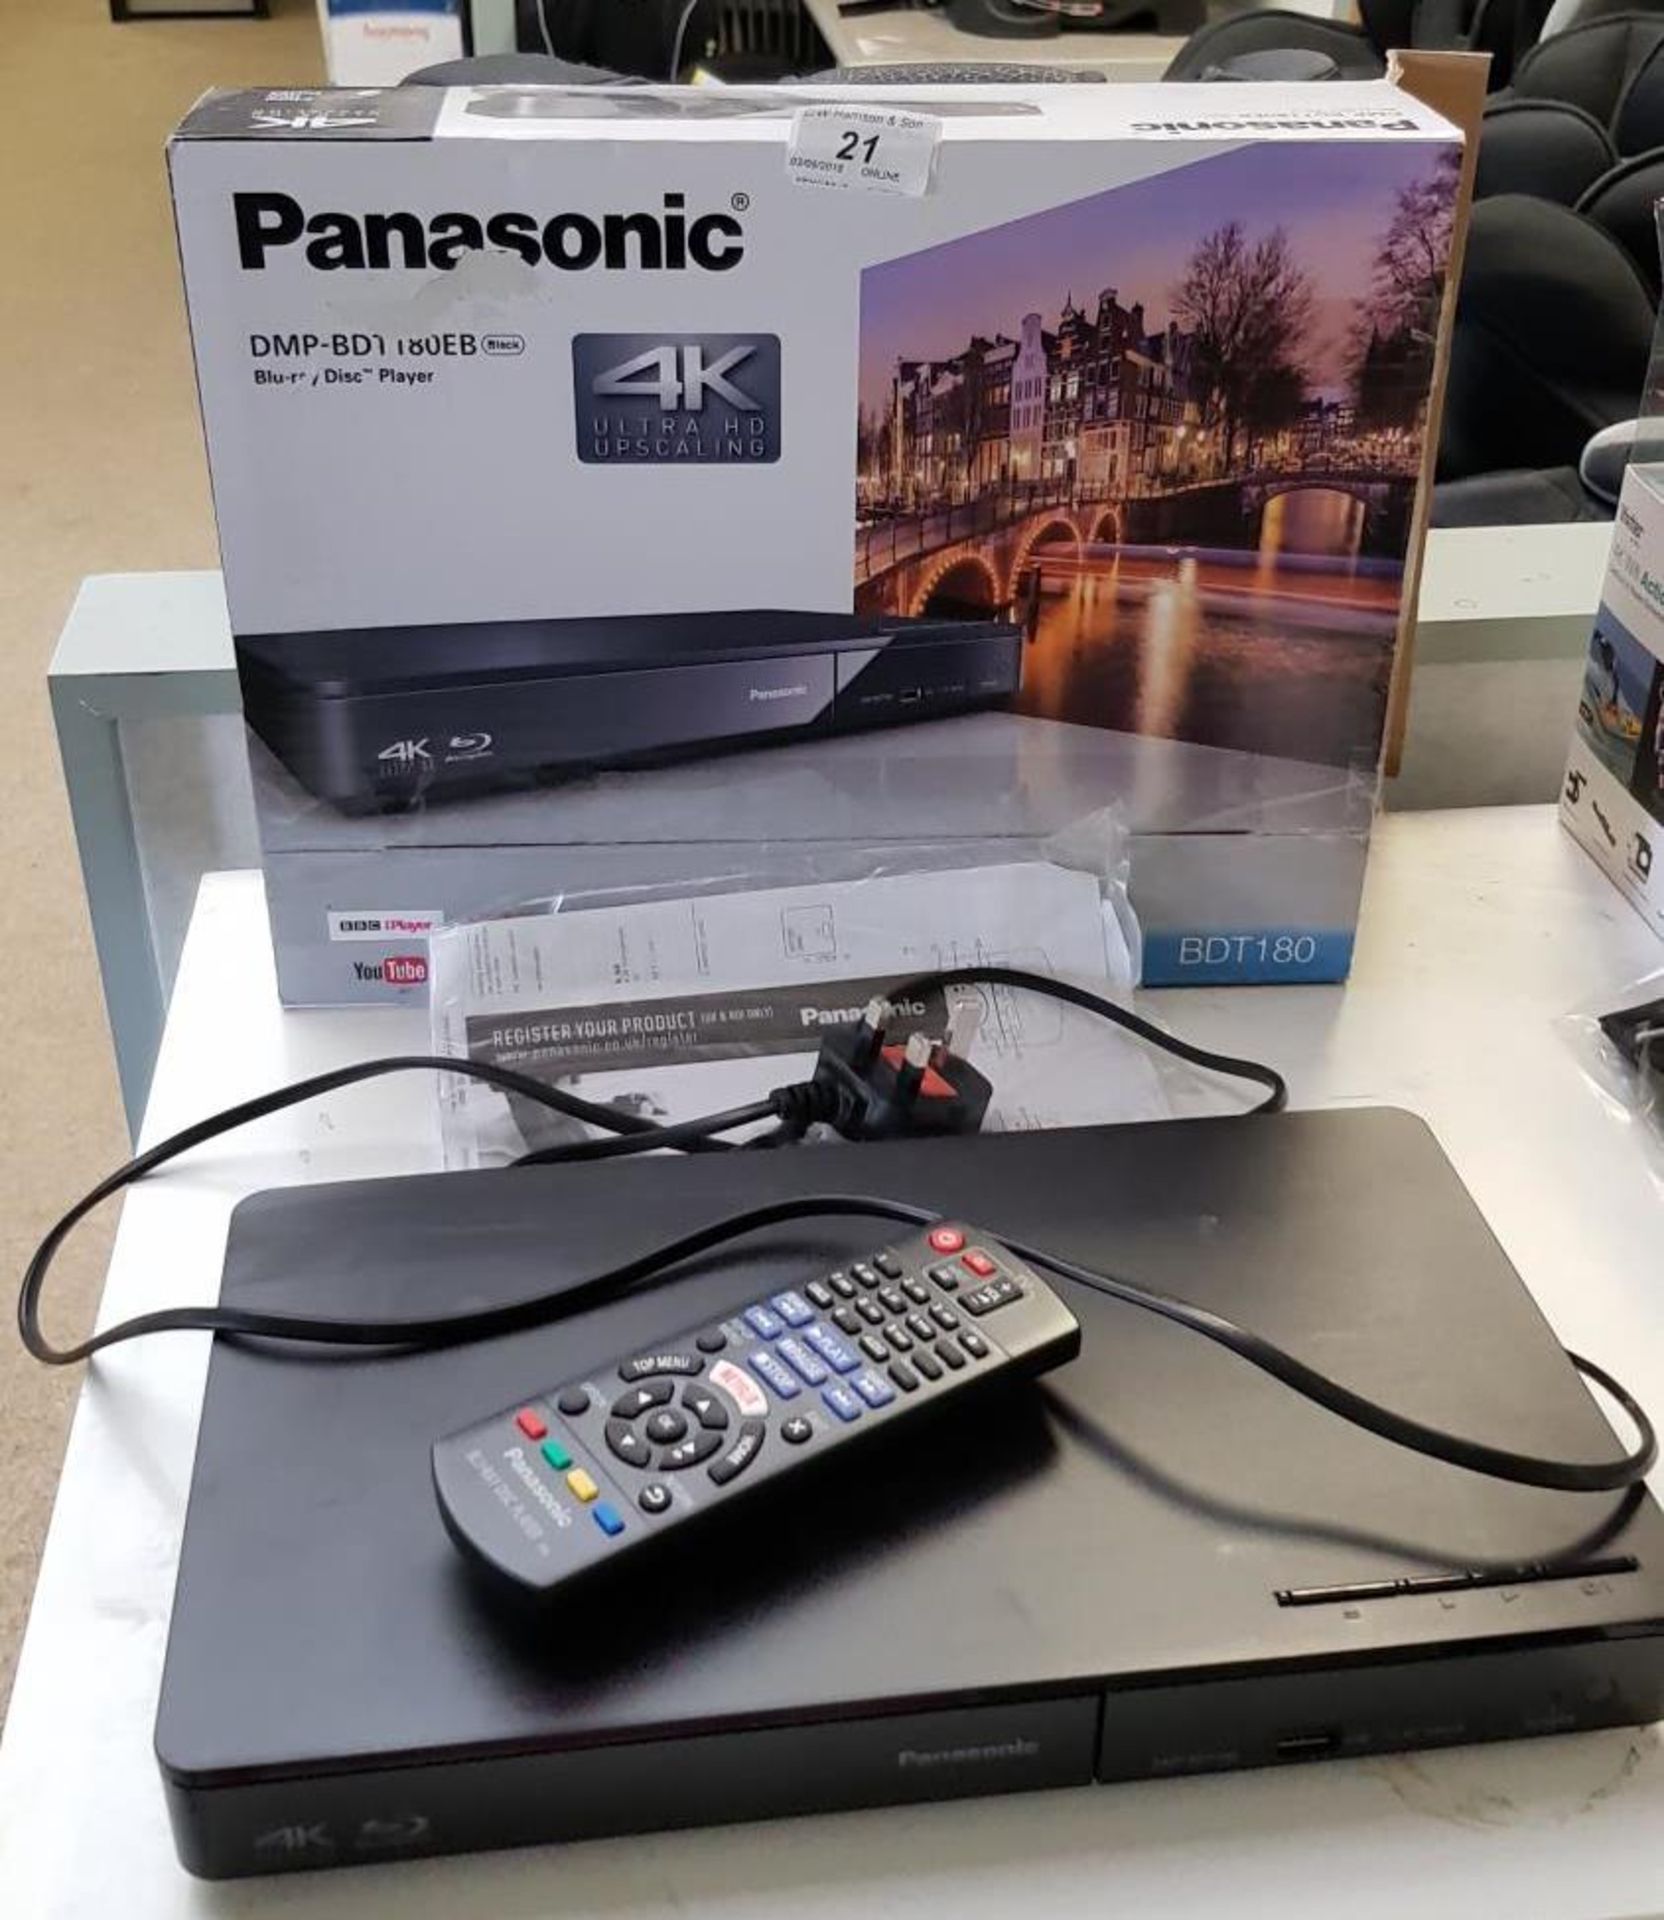 Panasonic DMP-BD1 180EB 4K Blu-Ray Disc